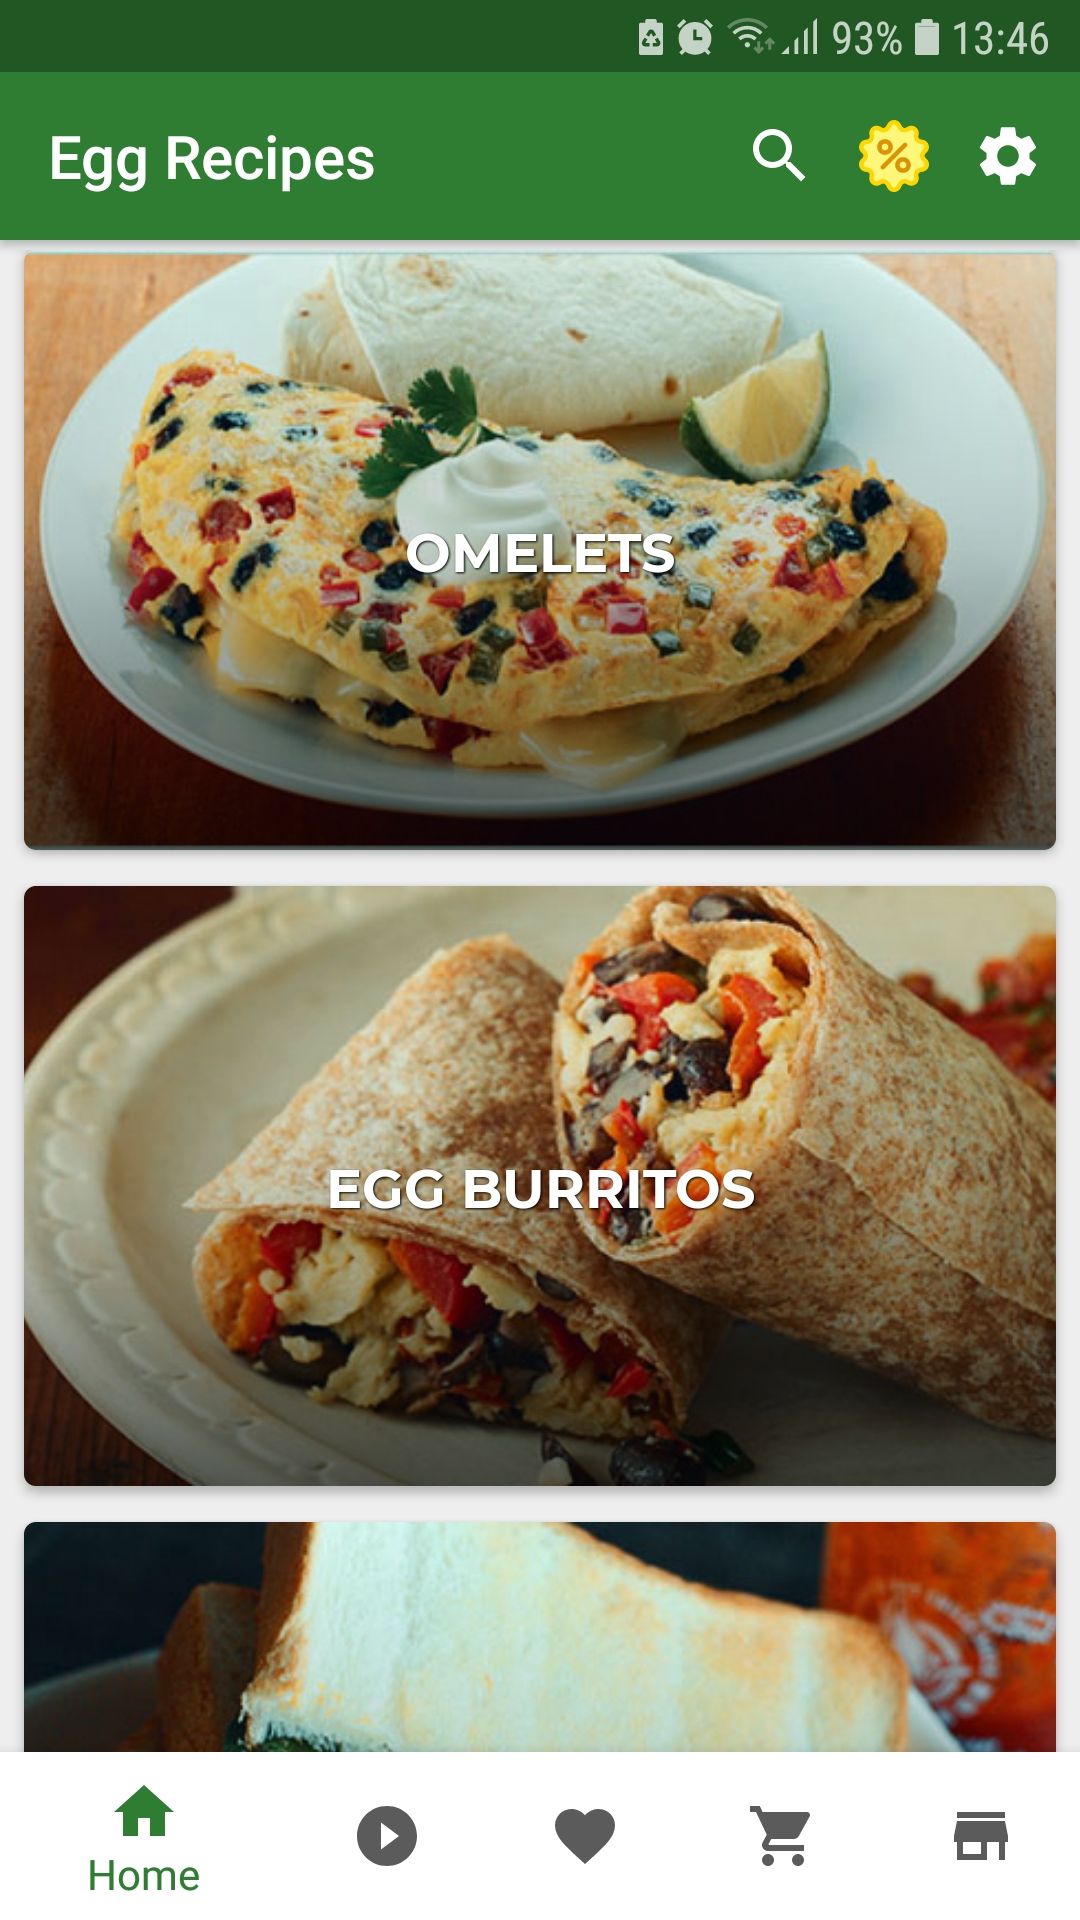 Egg Recipes mobile breakfast recipe app home